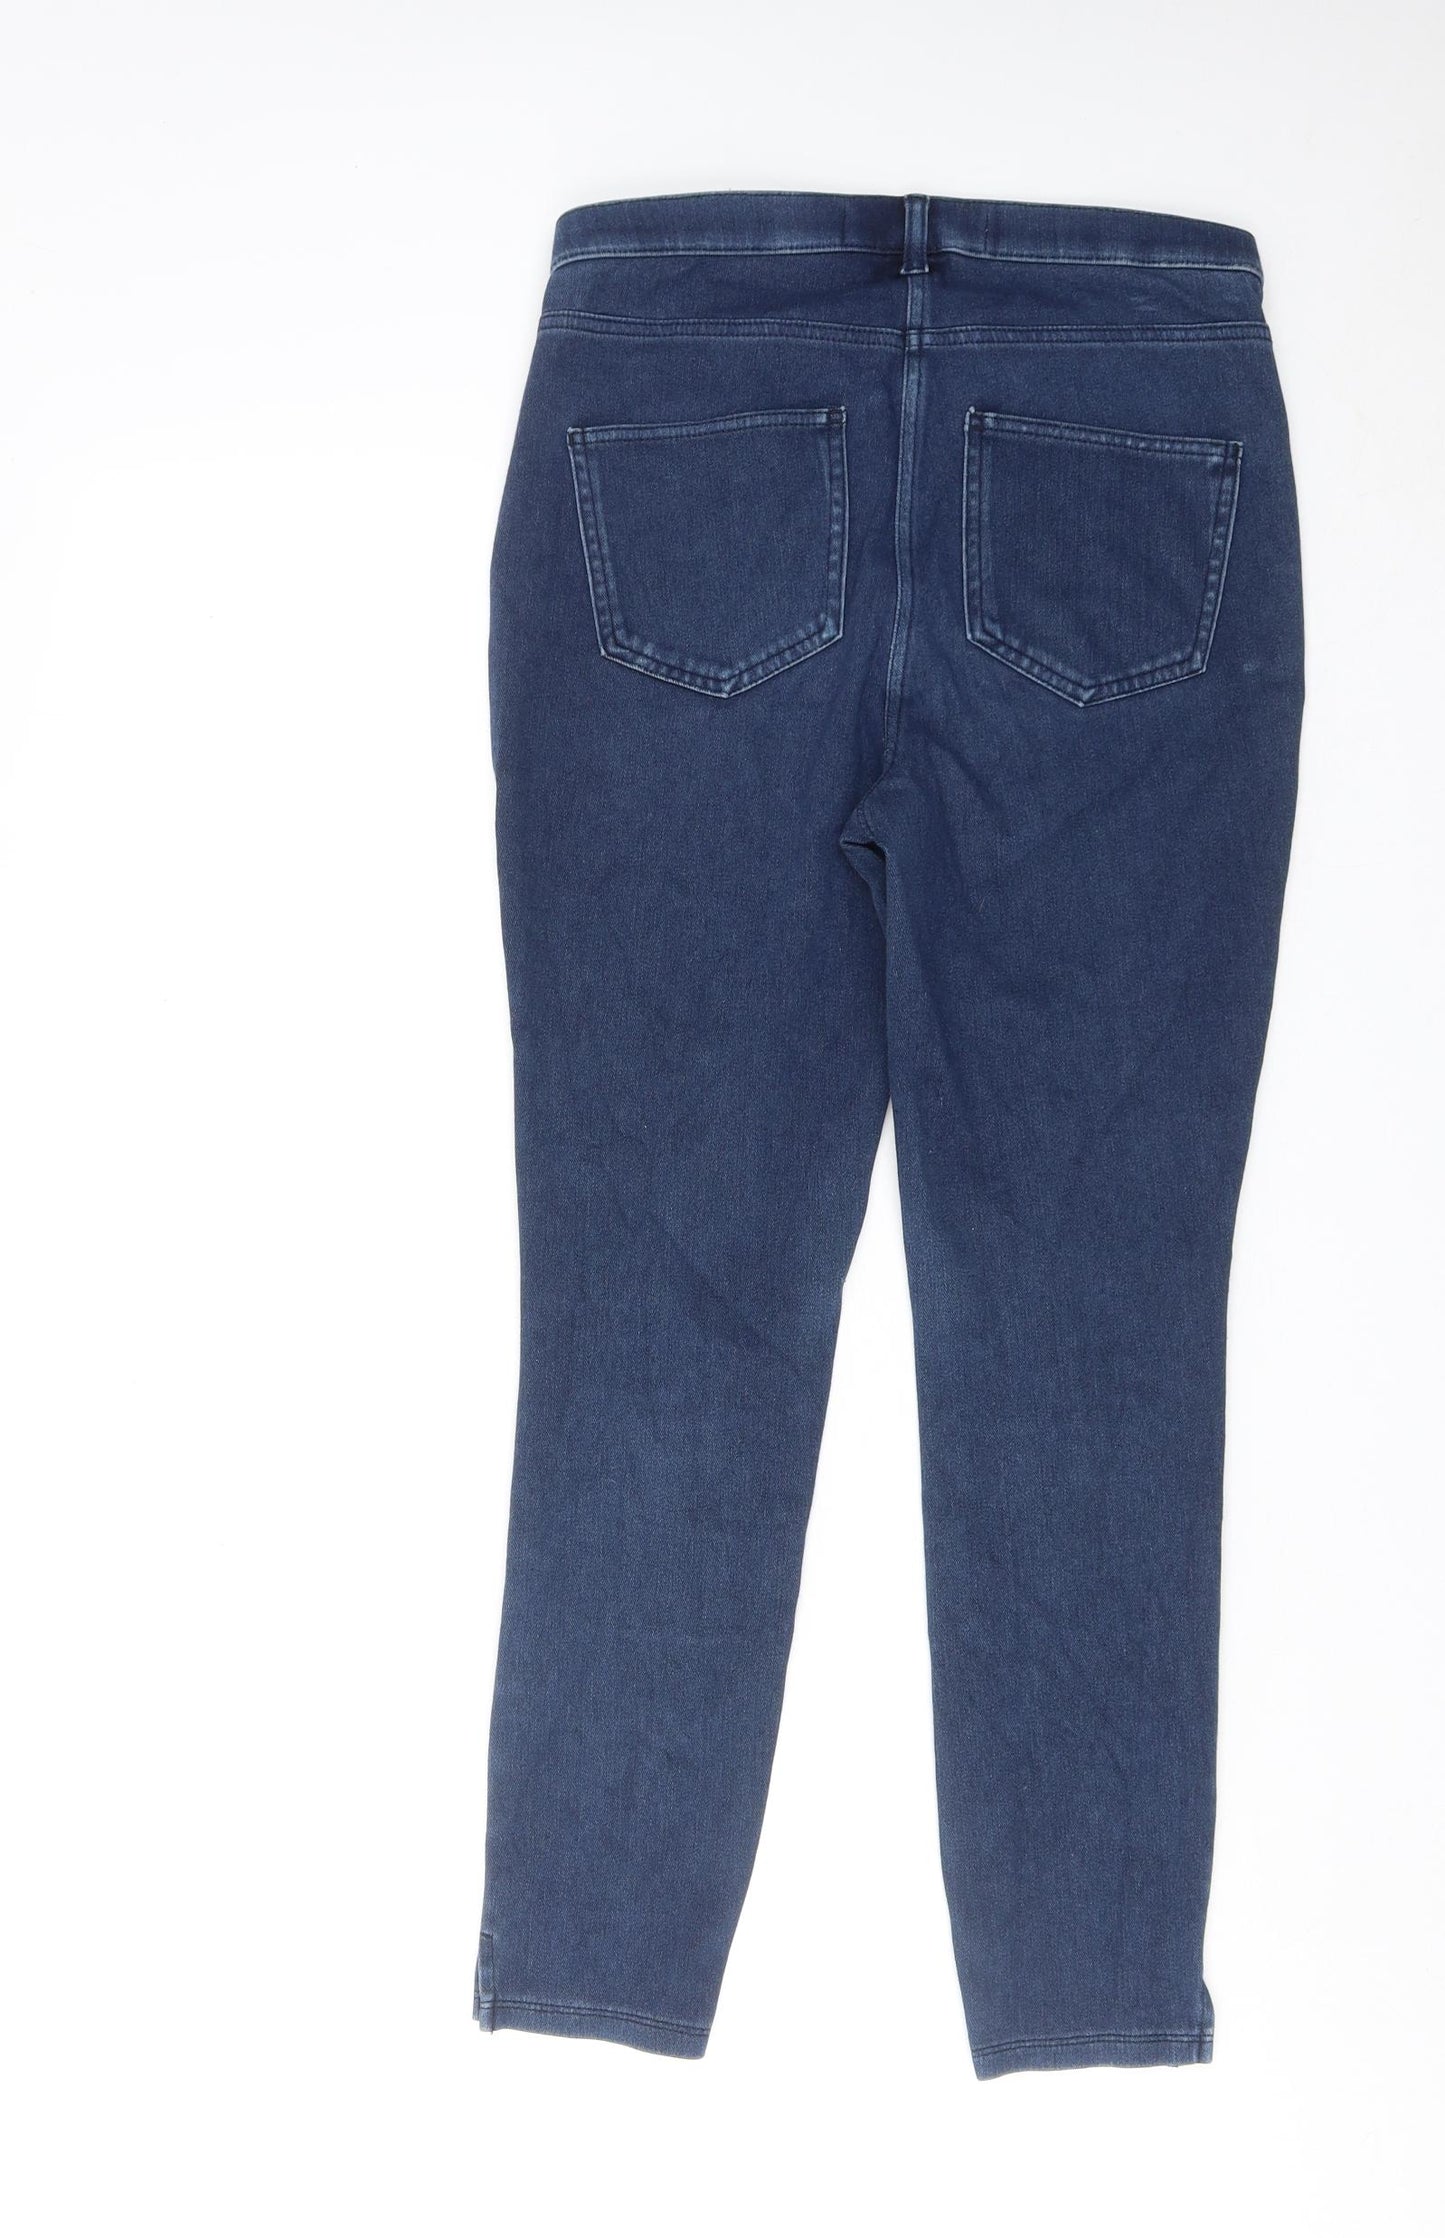 NEXT Womens Blue Cotton Jegging Jeans Size 10 Regular Zip